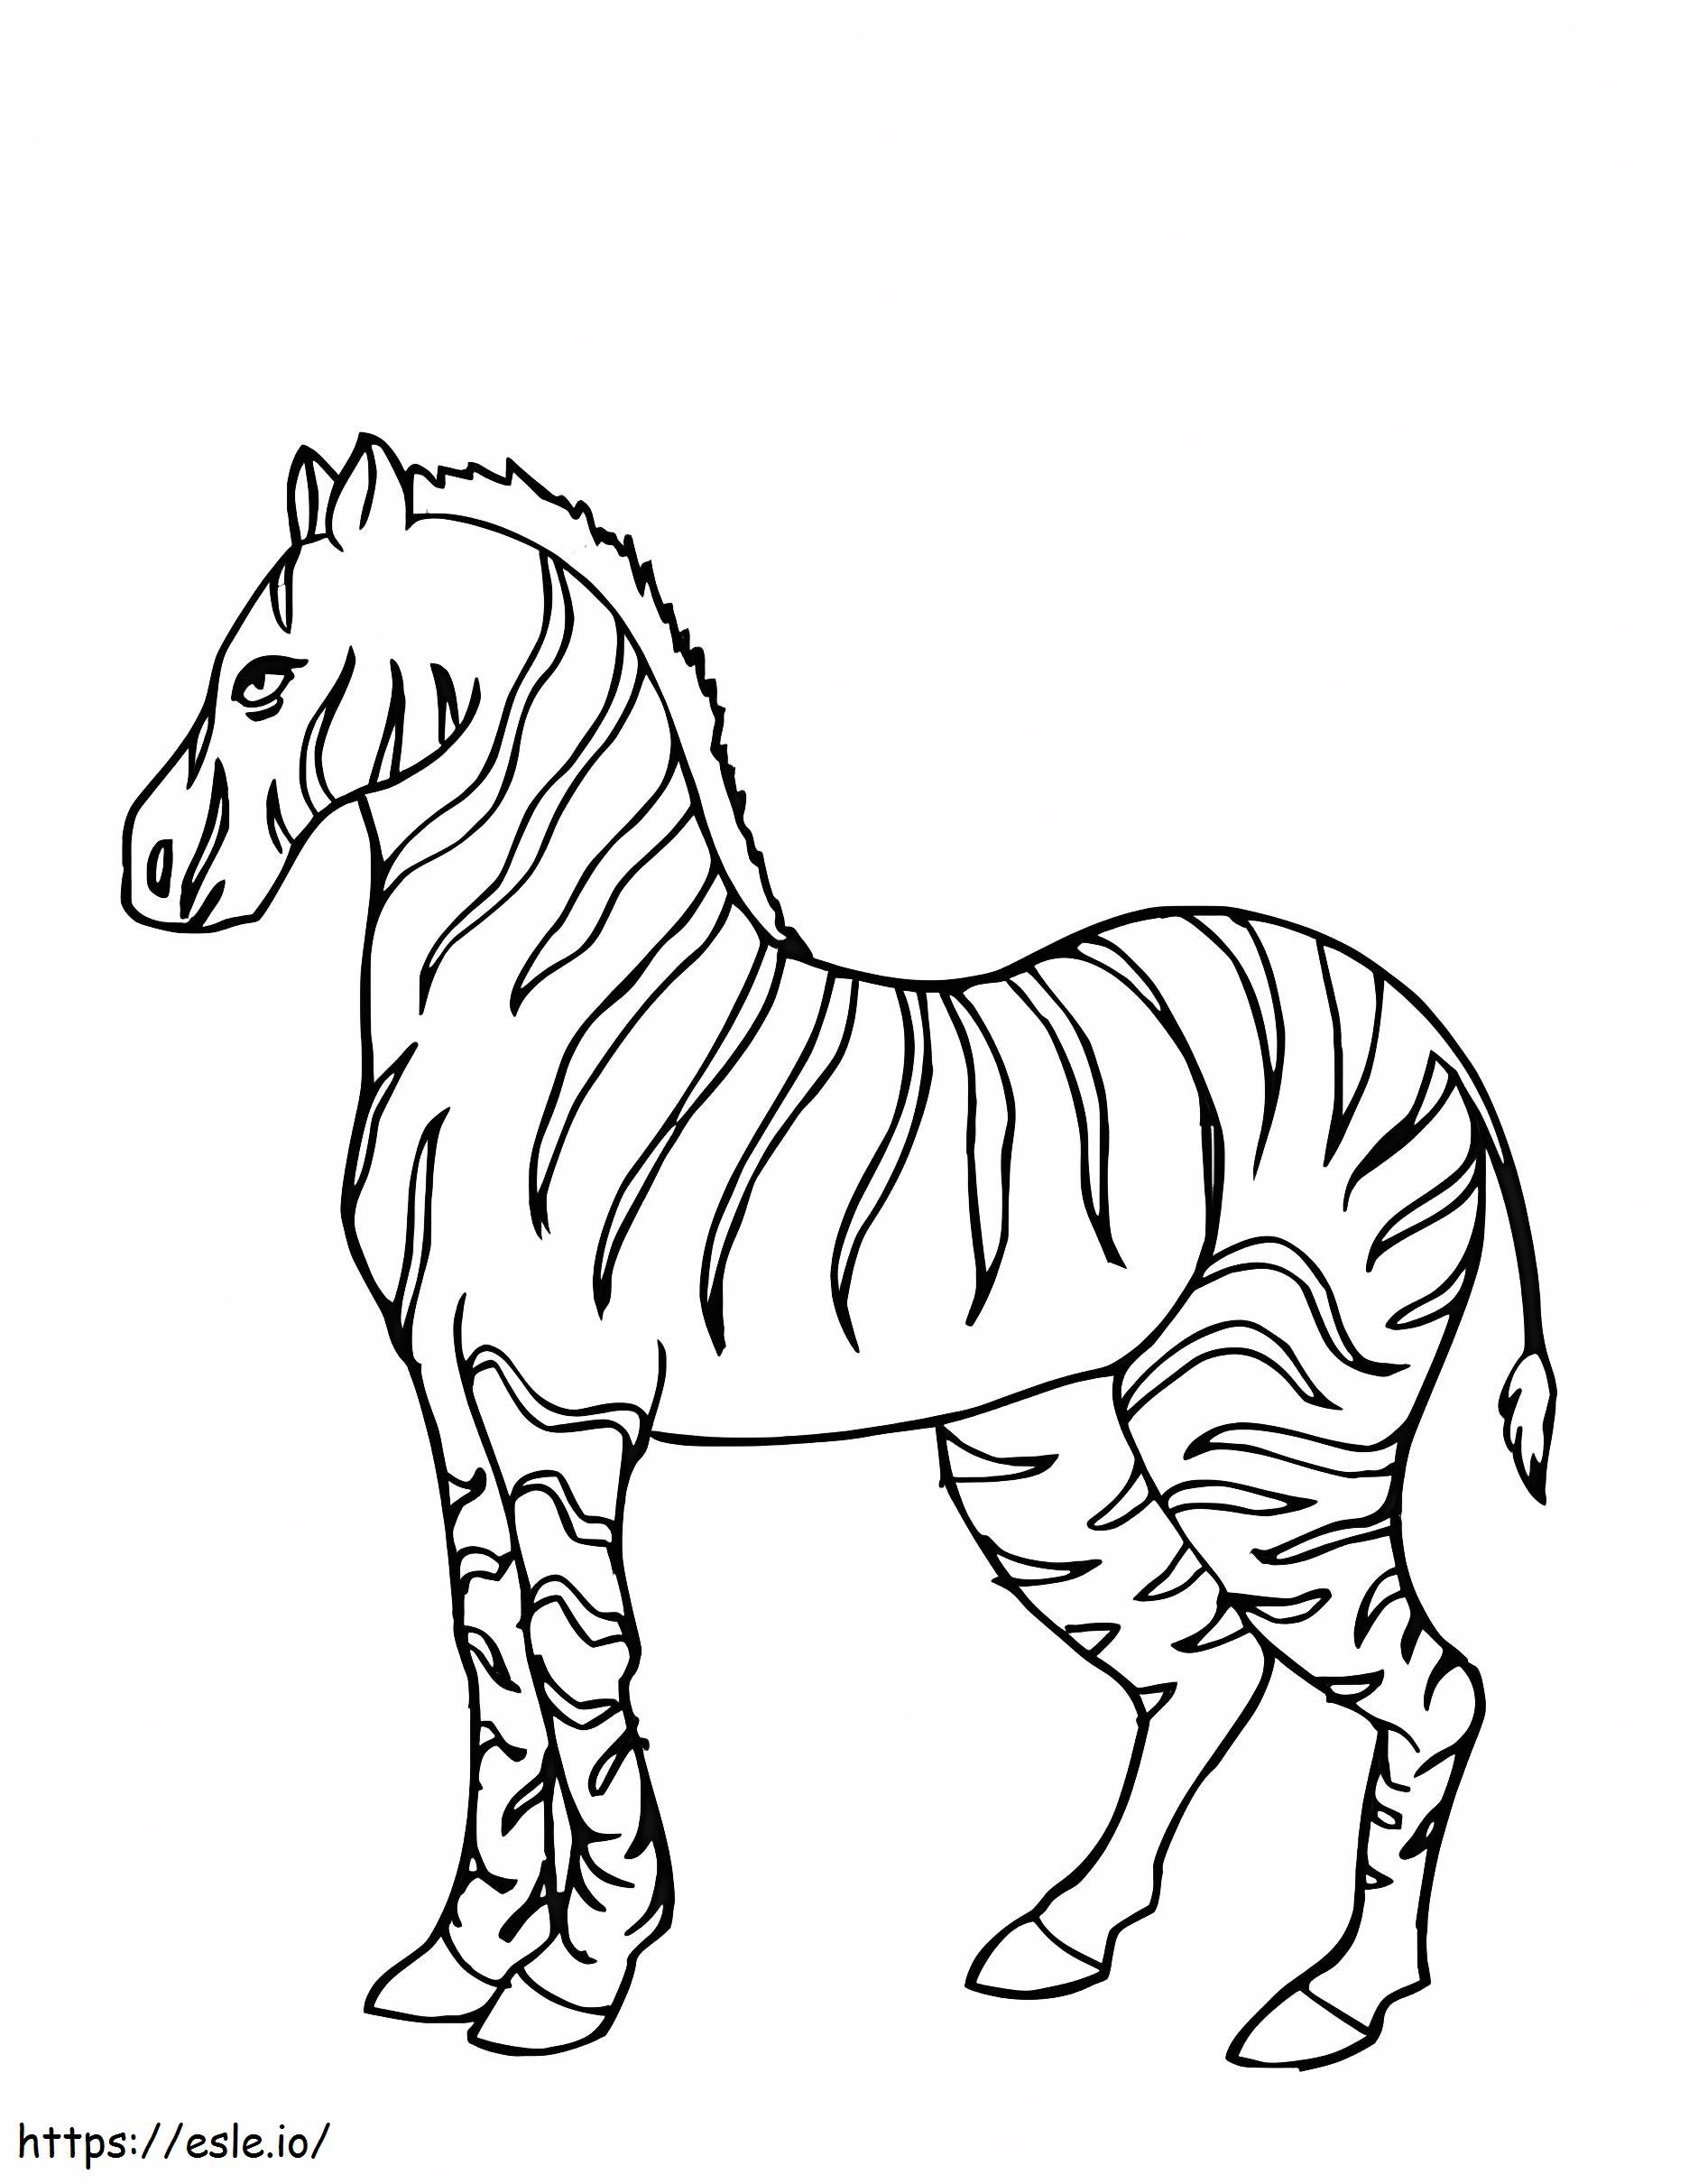 Impressive Zebra coloring page